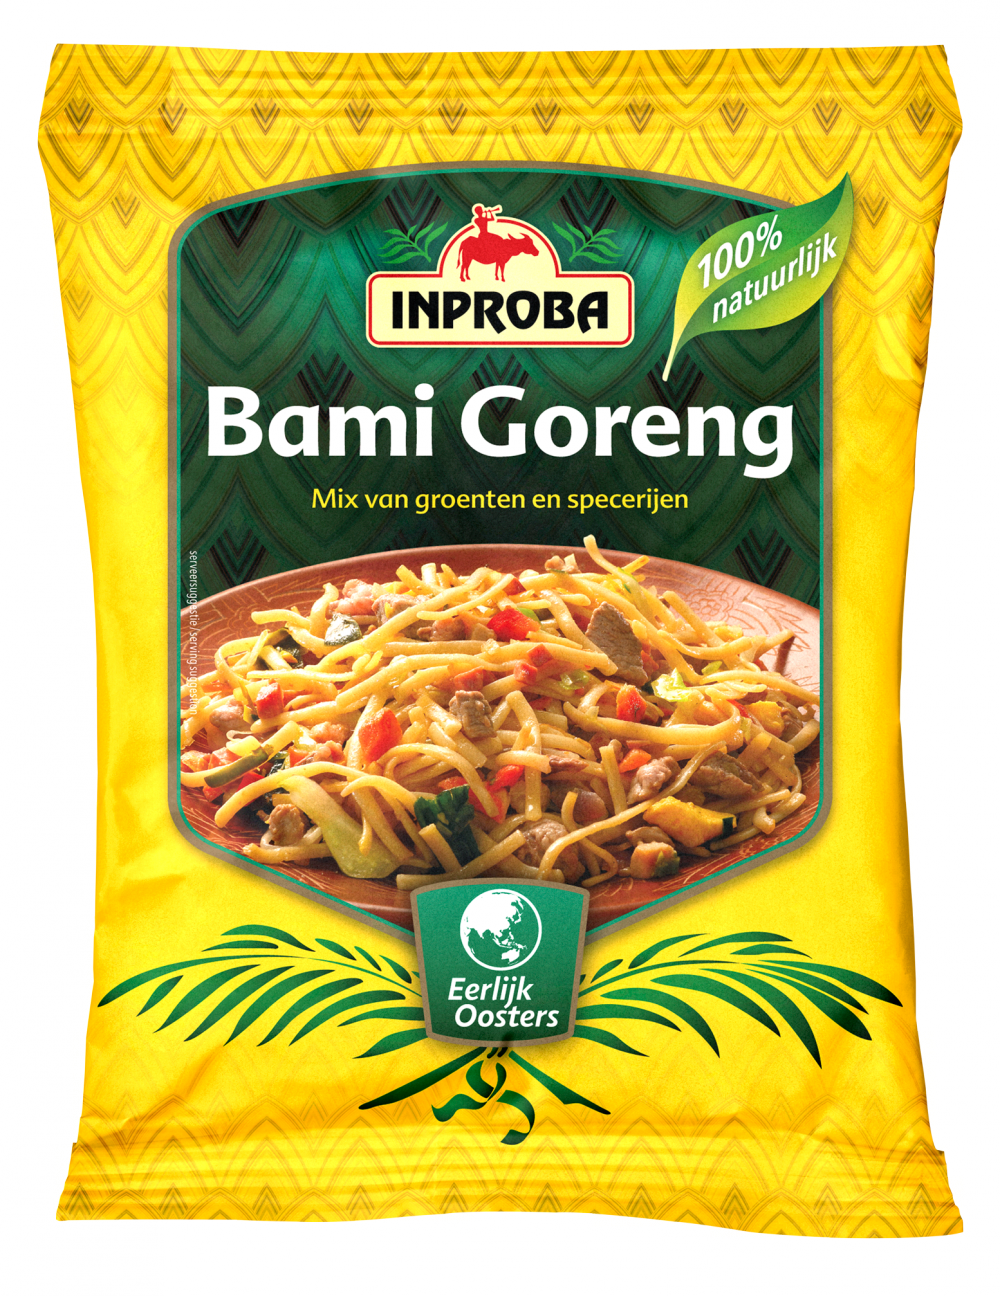 Bami Goreng - Inproba - Oriental Foods